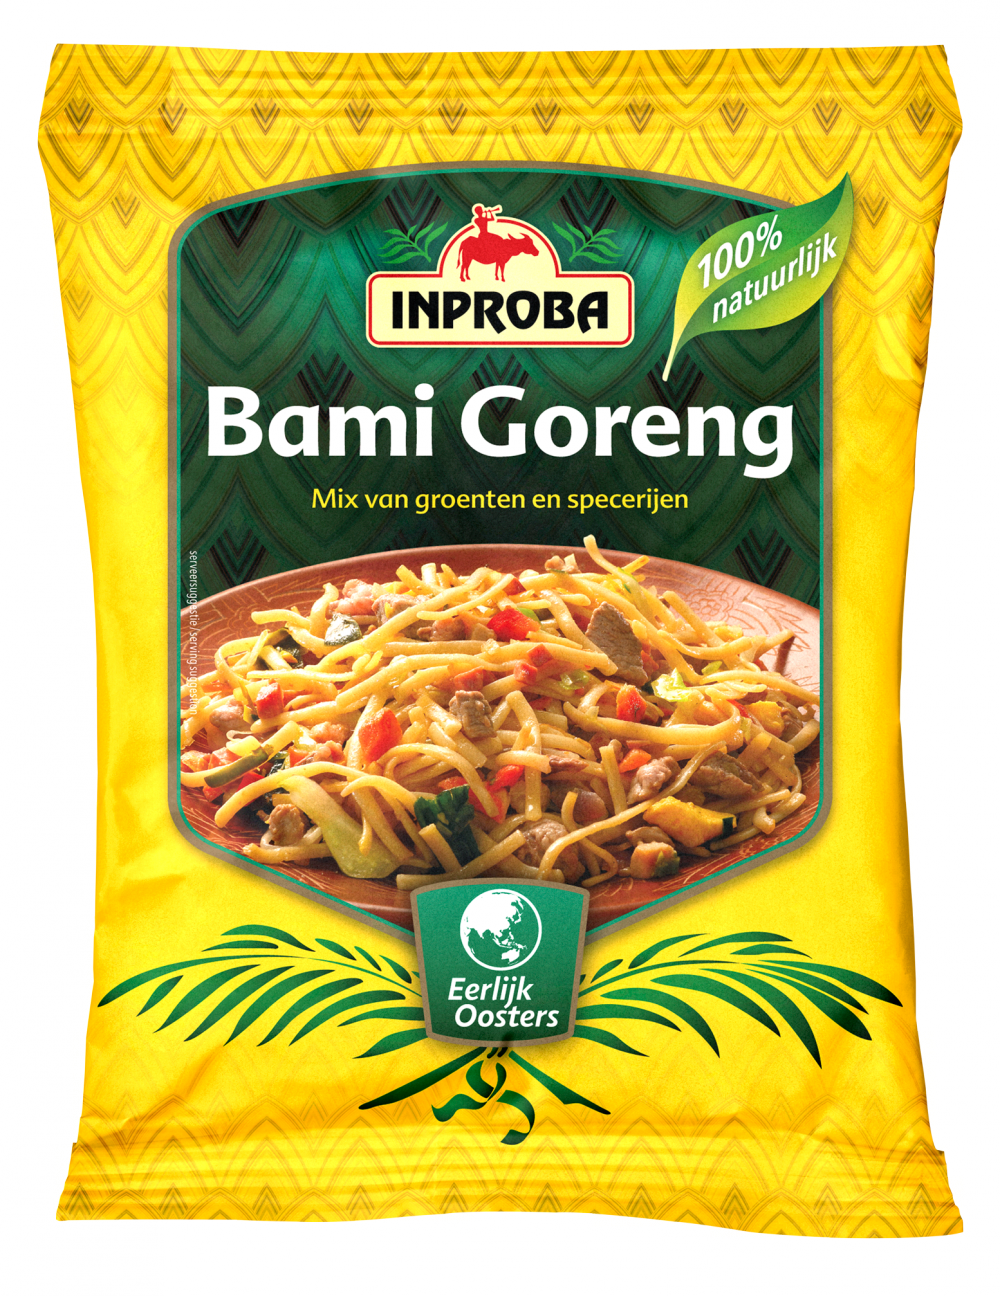 Bami Goreng - Inproba - Oriental Foods